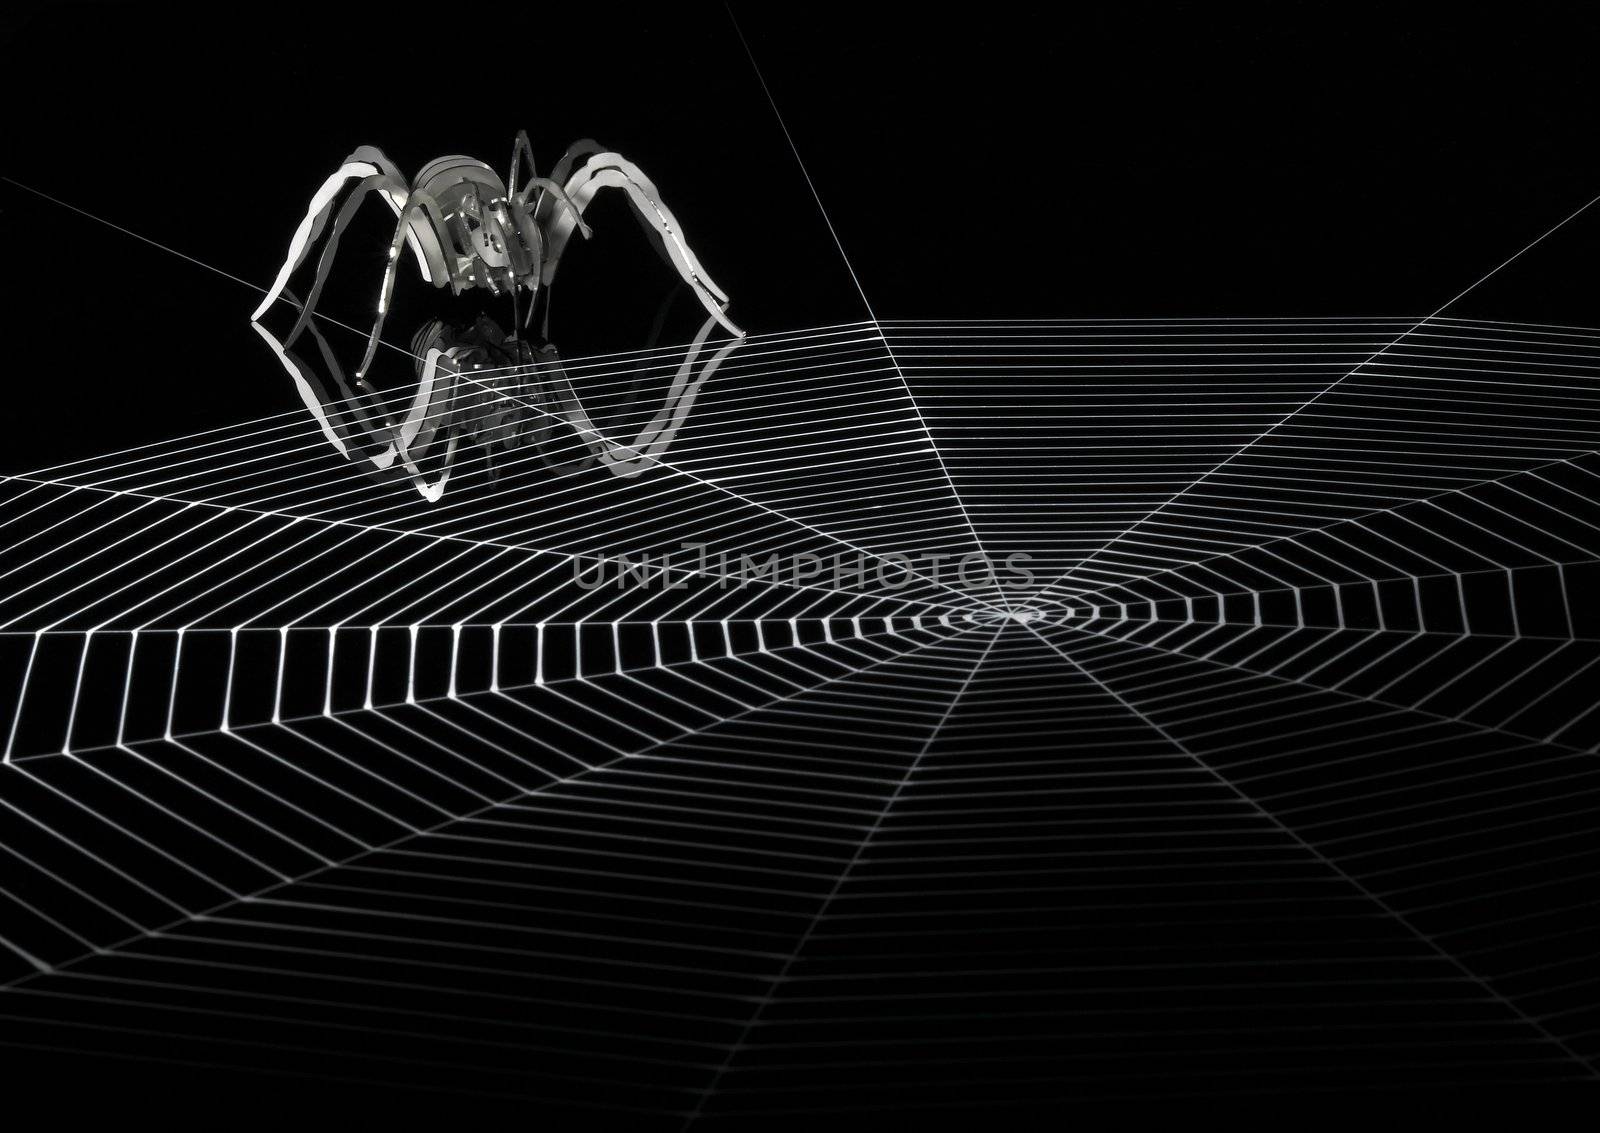 lurking metallic spider and web by gewoldi